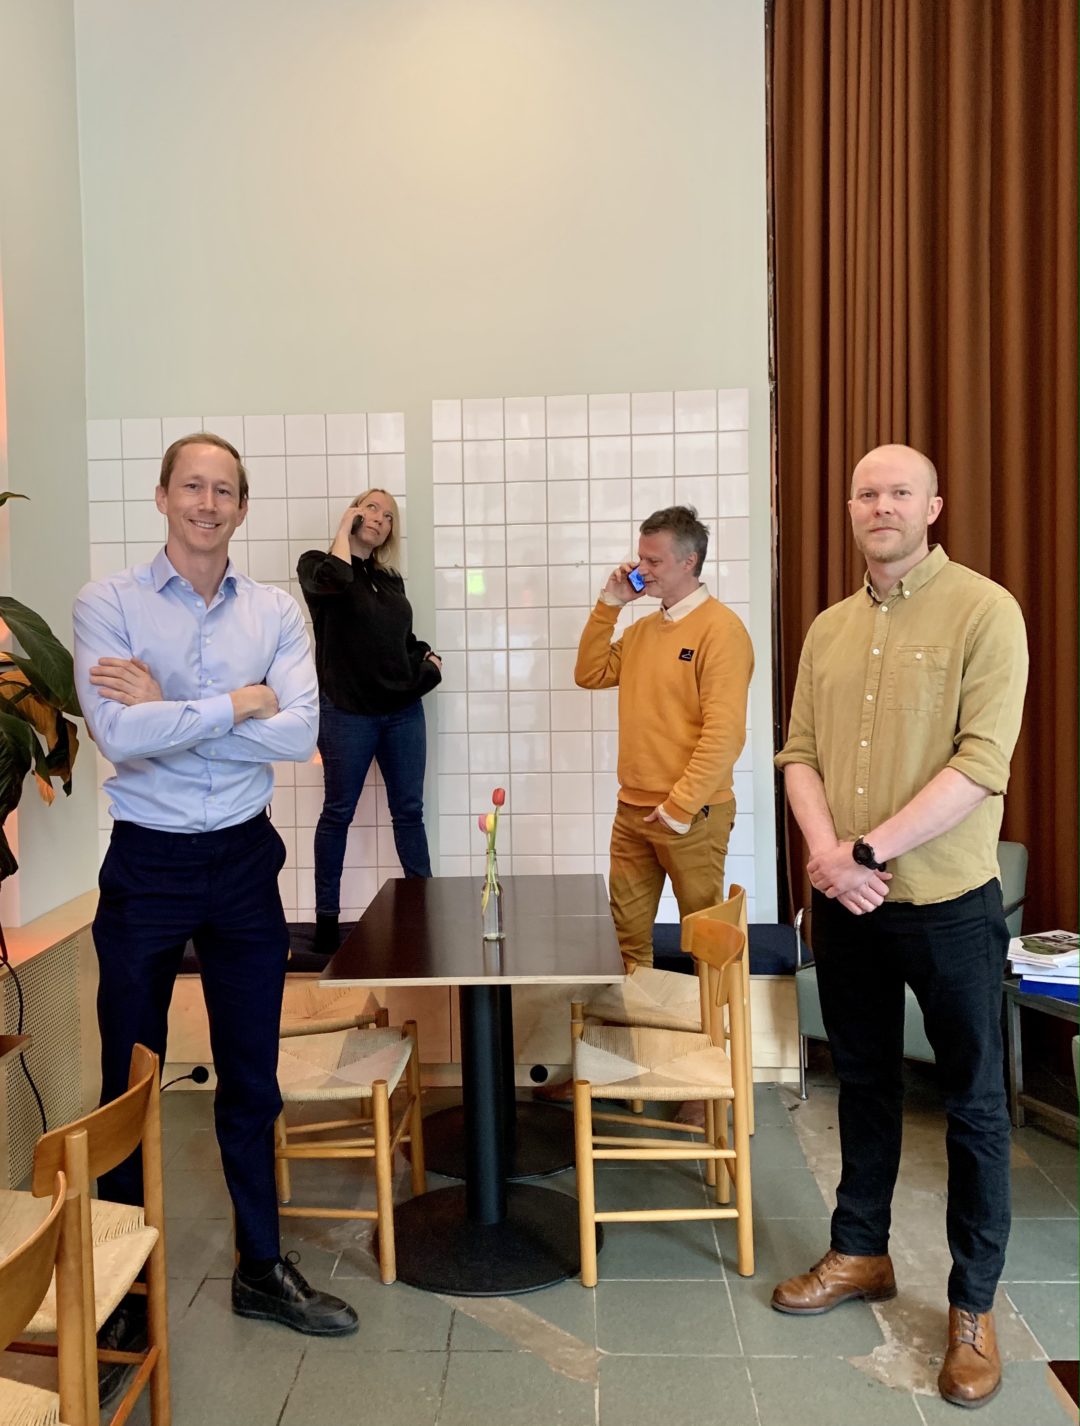 Henrik Botten Taubøll, Maren Bjerkeng, Erling Fossen og Martin Rasch Ersdal poserer i kaféomgivelser